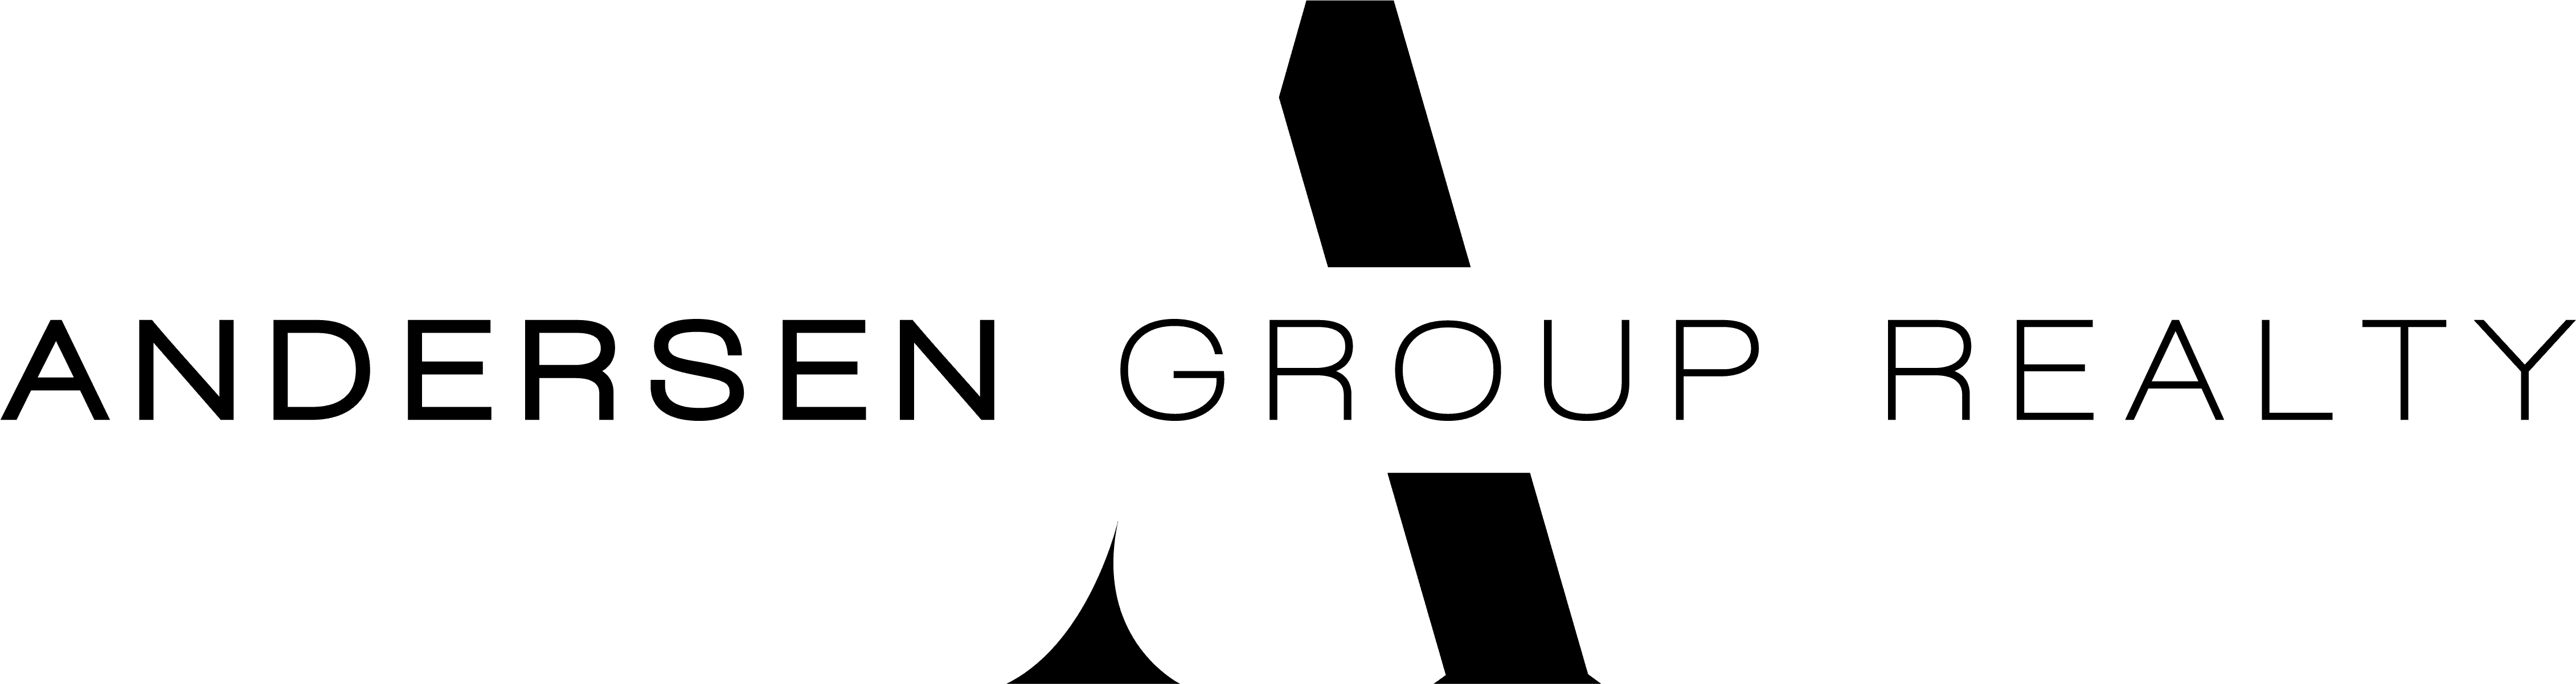 The Andersen Group